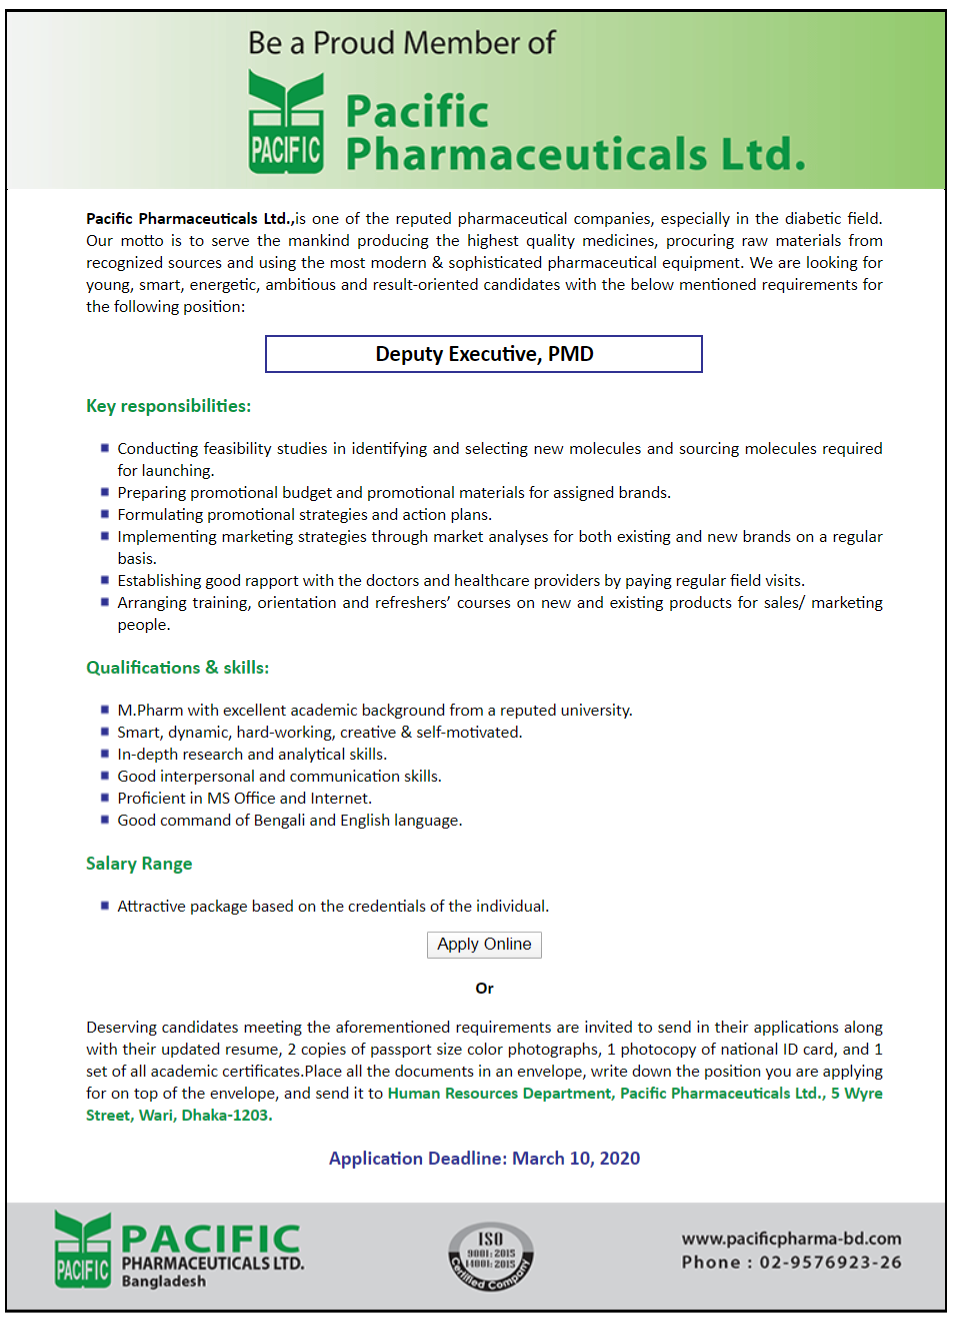 Pacific Pharmaceuticals Ltd. Job circular 2020